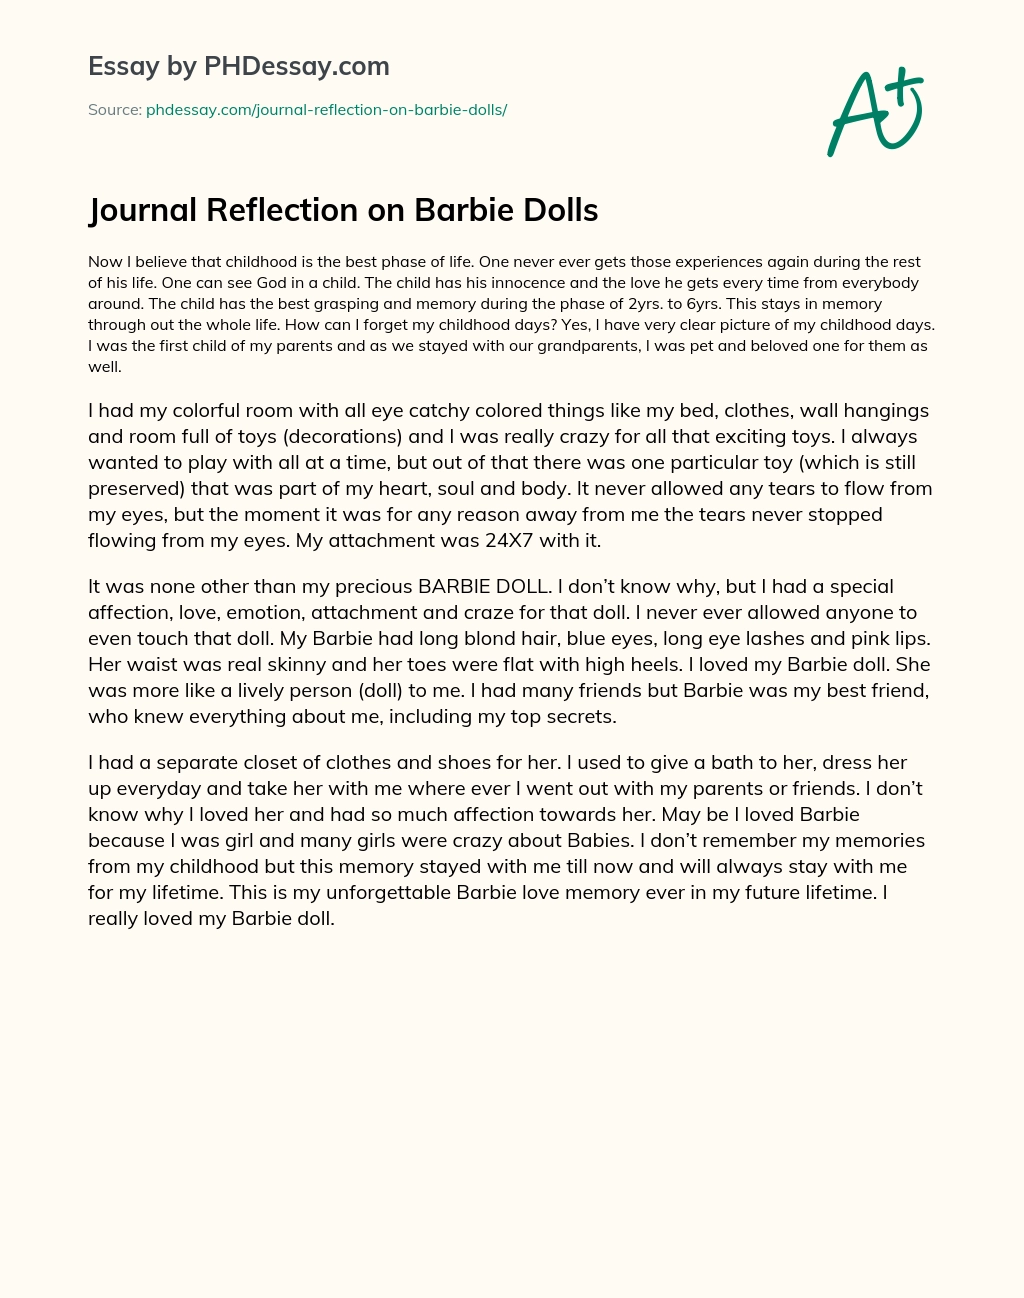 Journal Reflection on Barbie Dolls essay